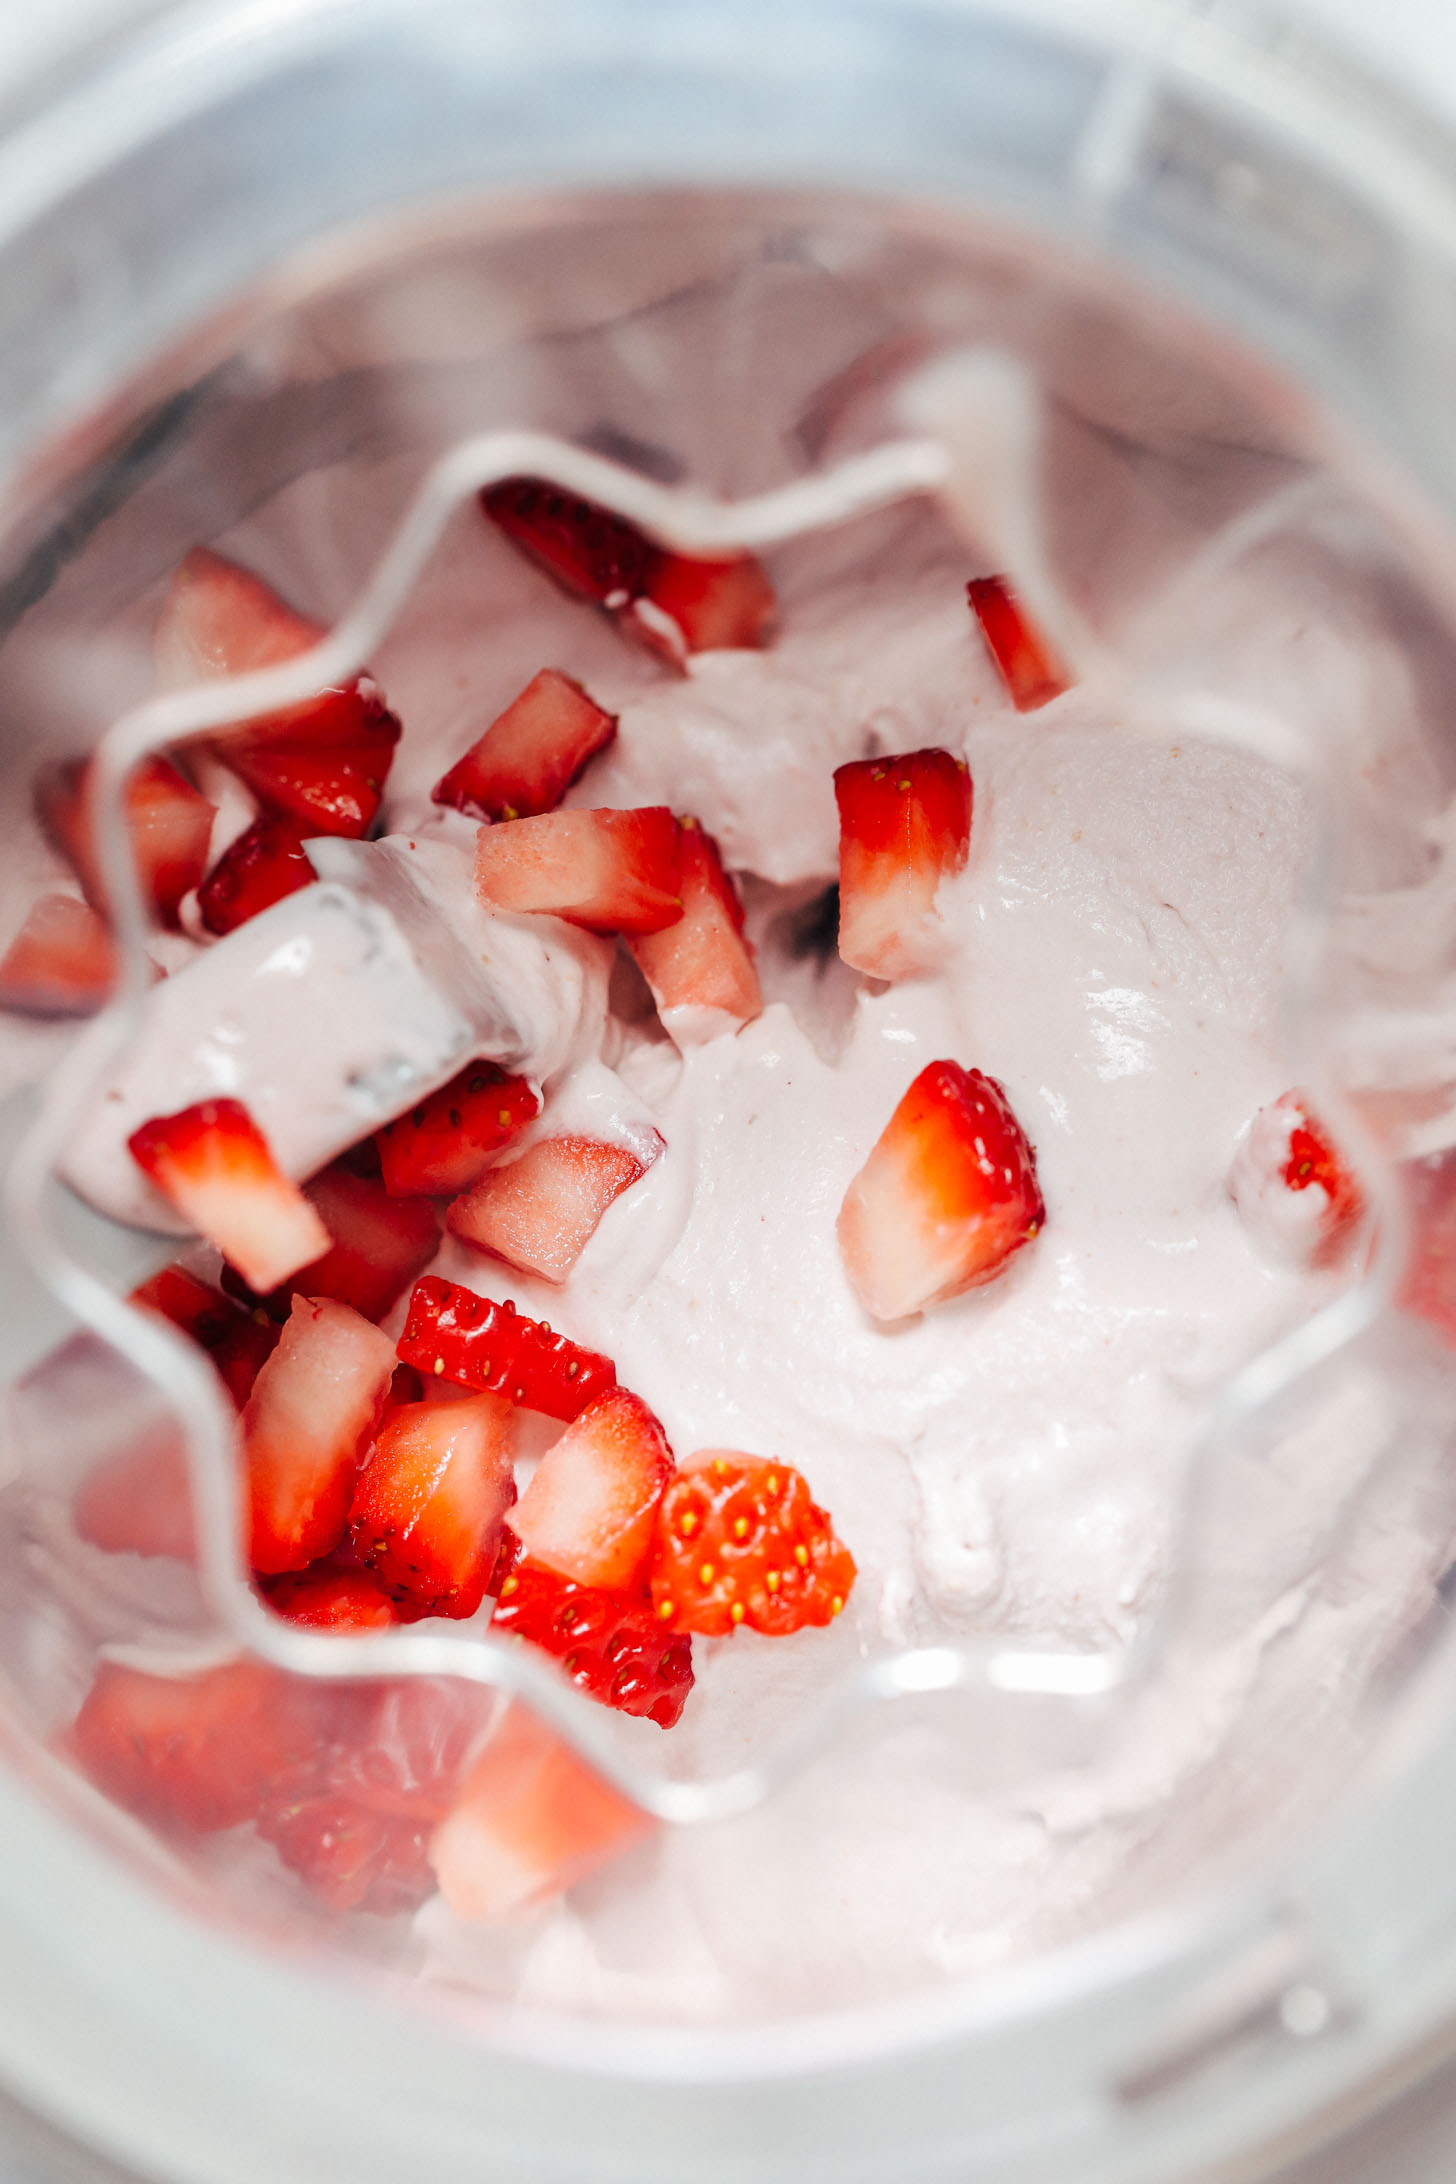 Ice cream churner with vegan strawberry ice cream topped with chopped fresh strawberries